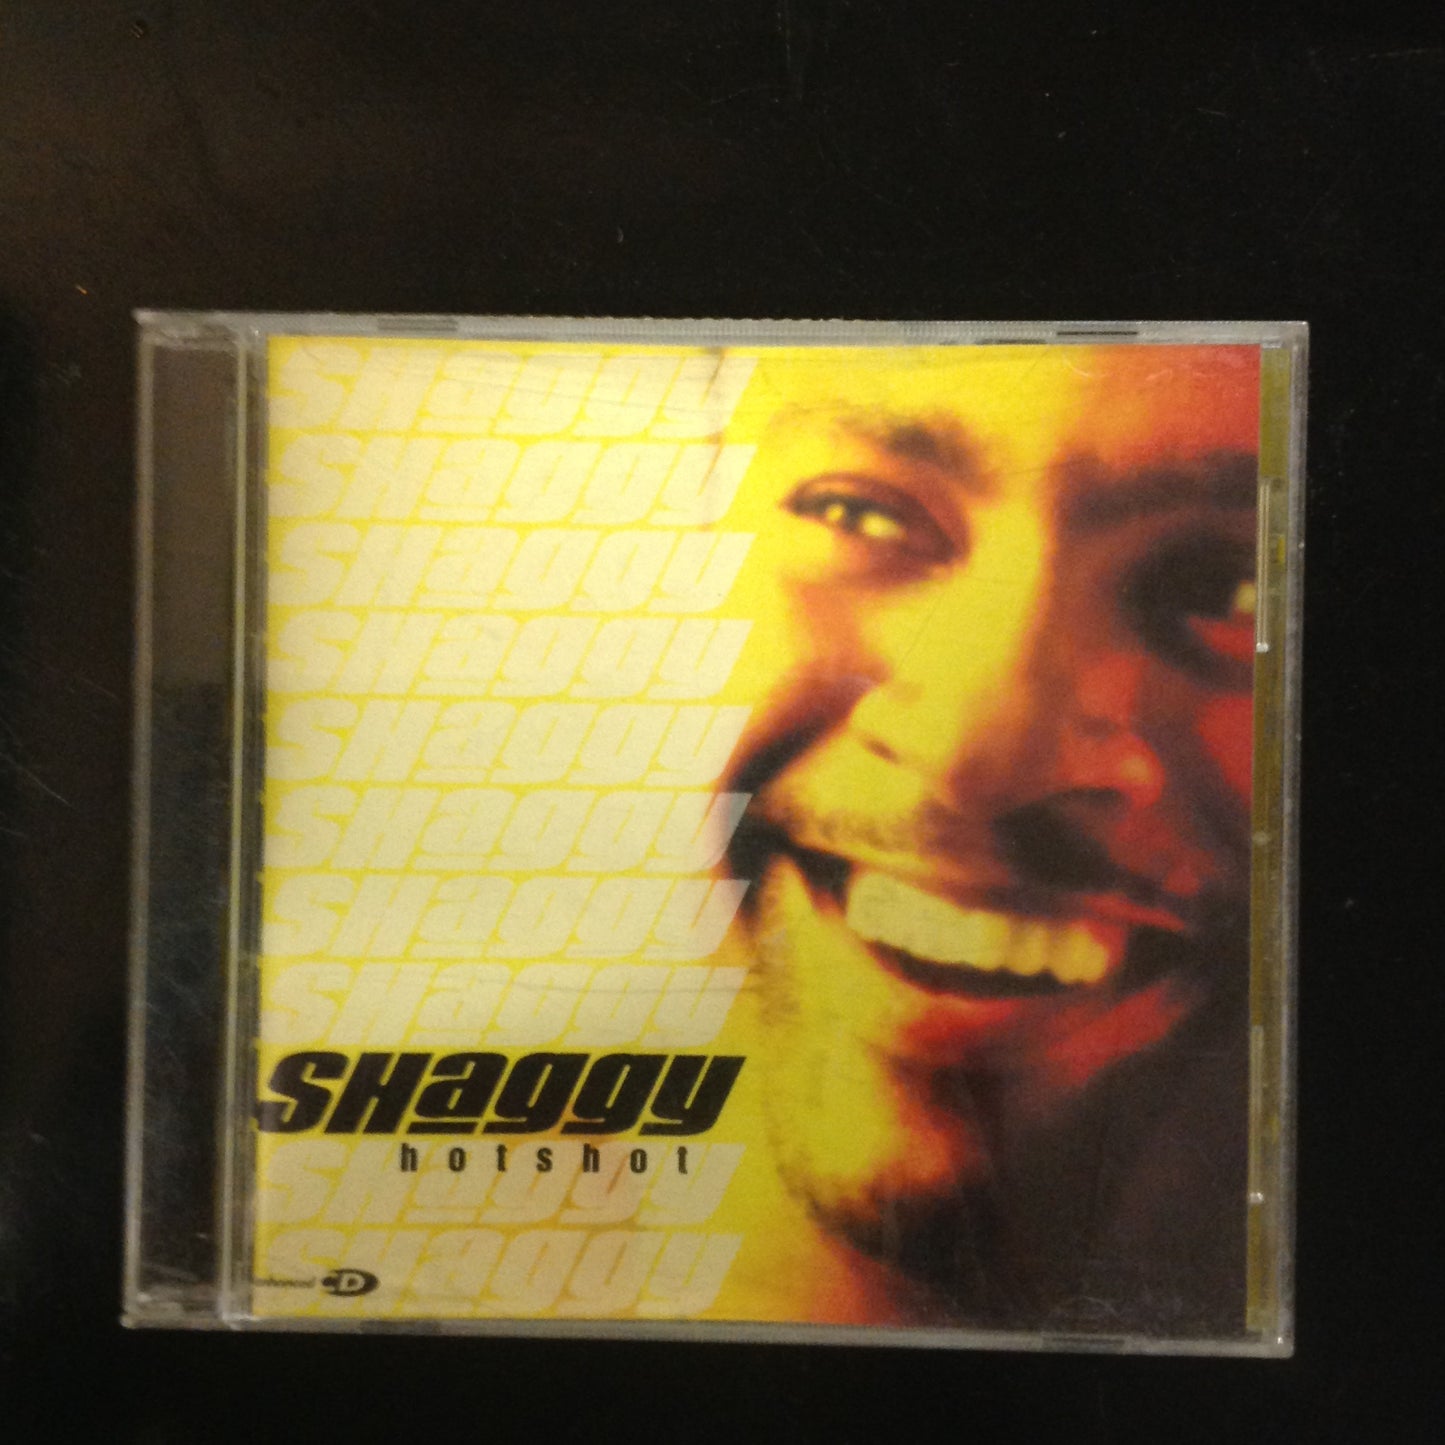 BARGAIN CD Shaggy Hotshot 088112096-2 2000 It Wasn't Me